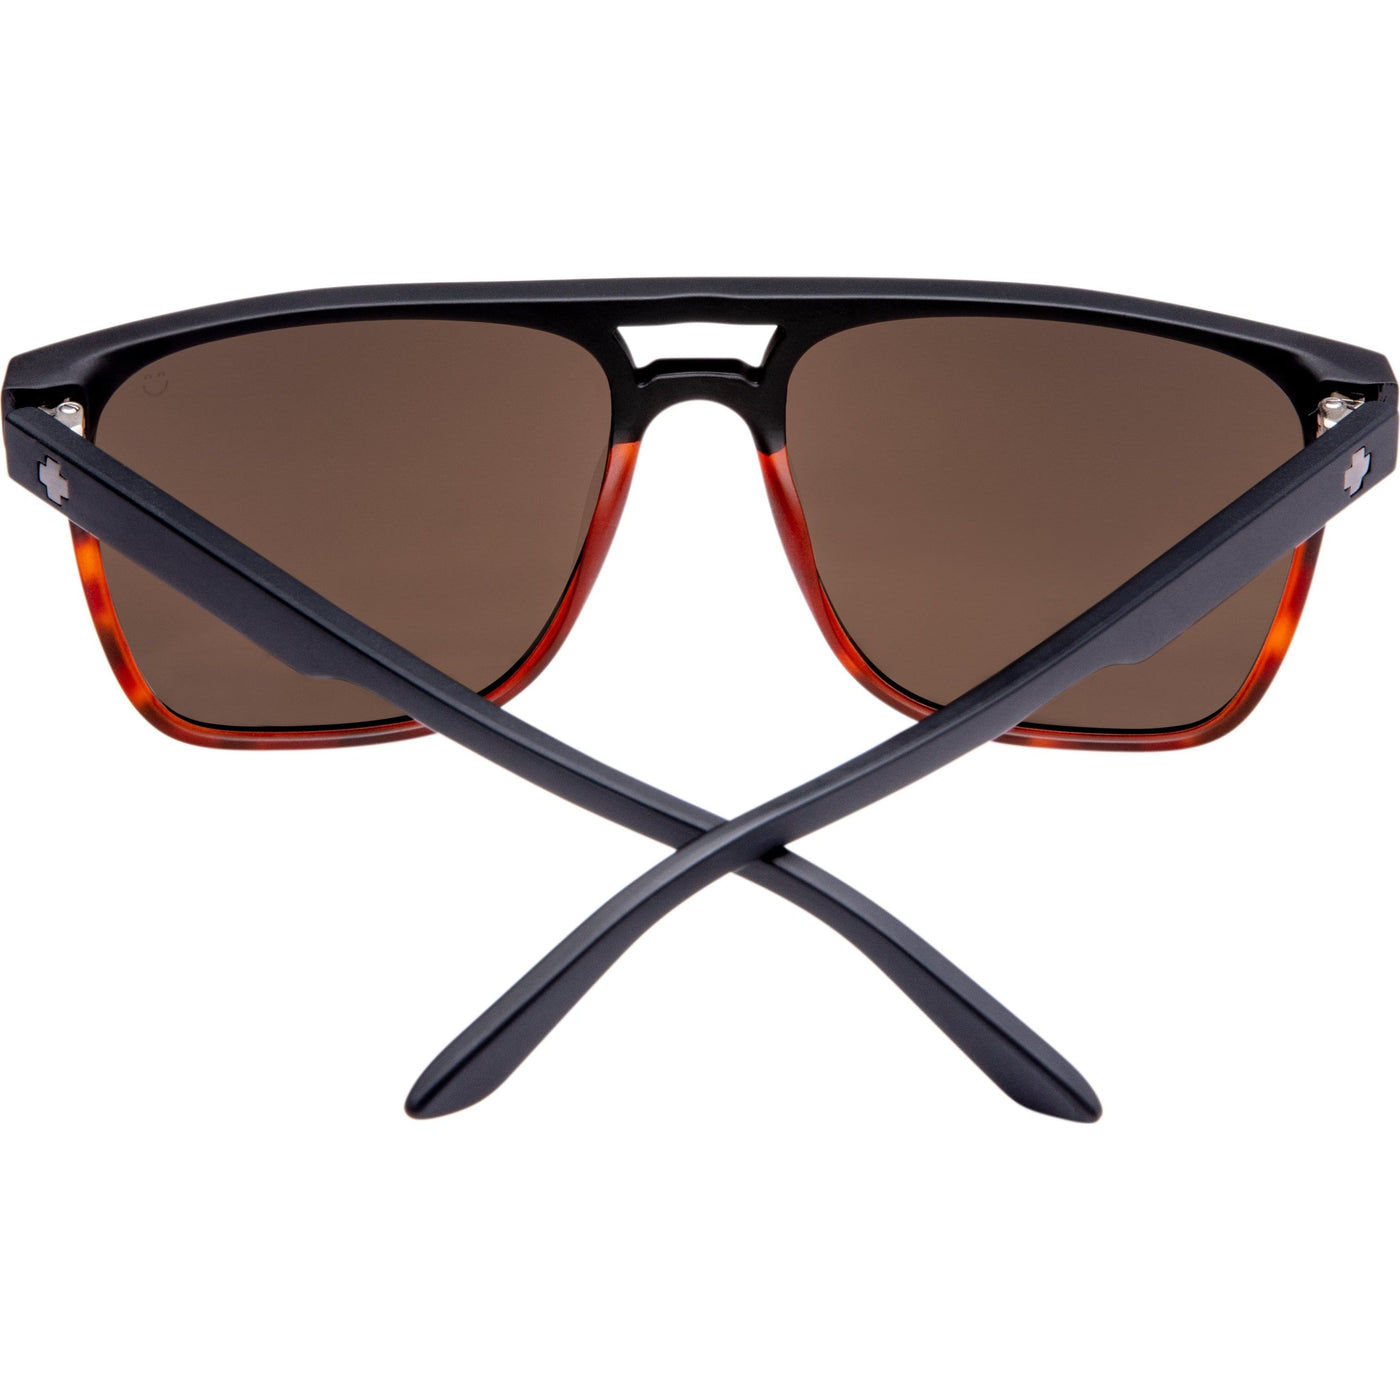 SPY CZAR sunglasses - polarized